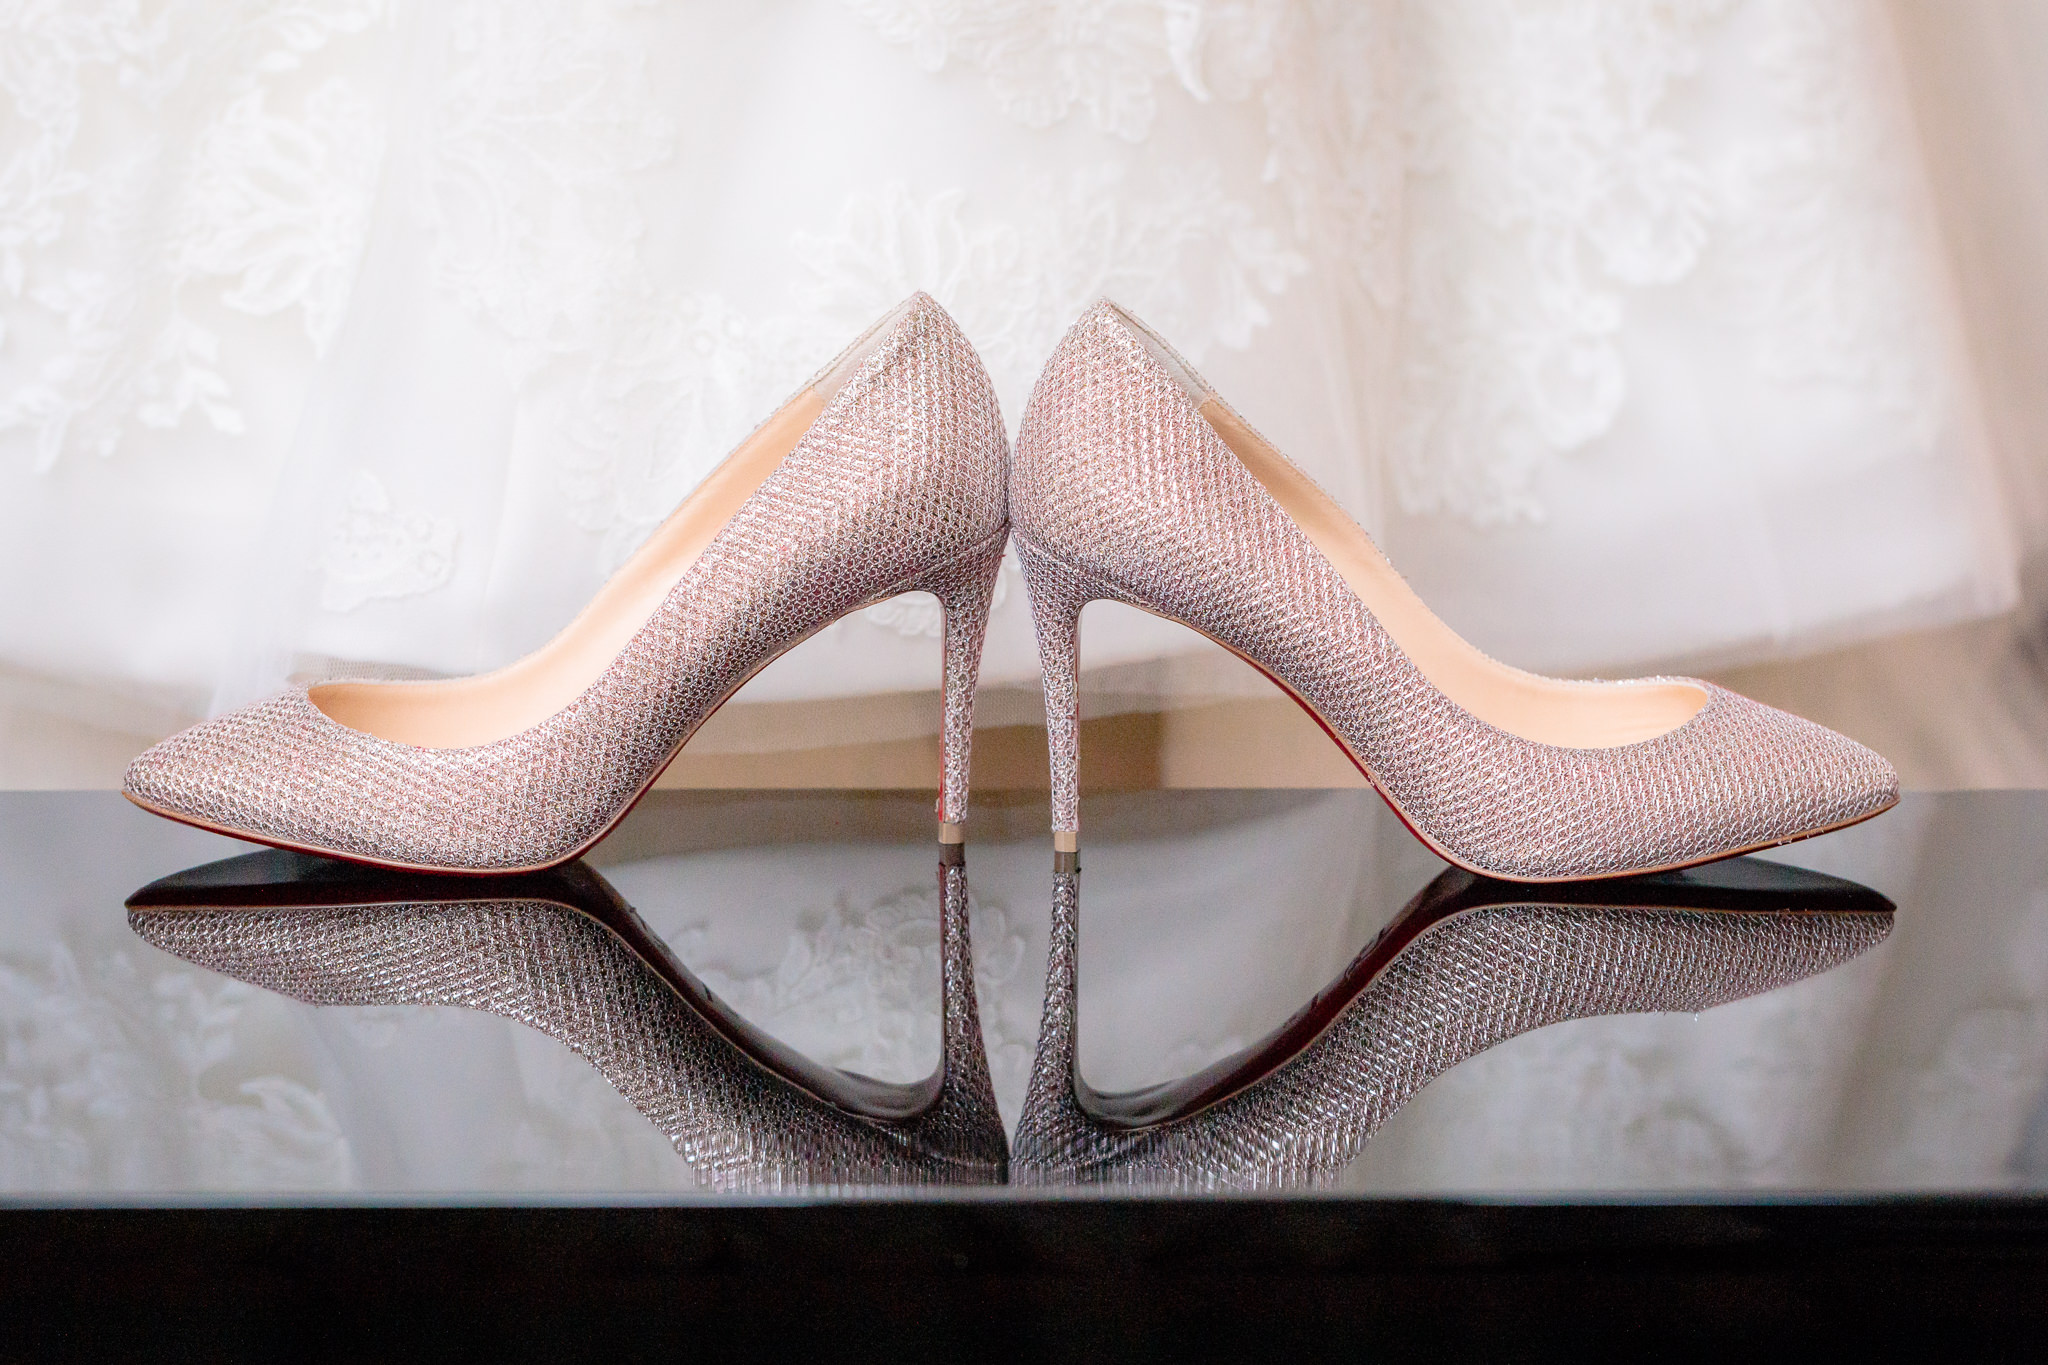 Gold Christian Louboutin heels for a Pittsburgh Hotel Monaco wedding